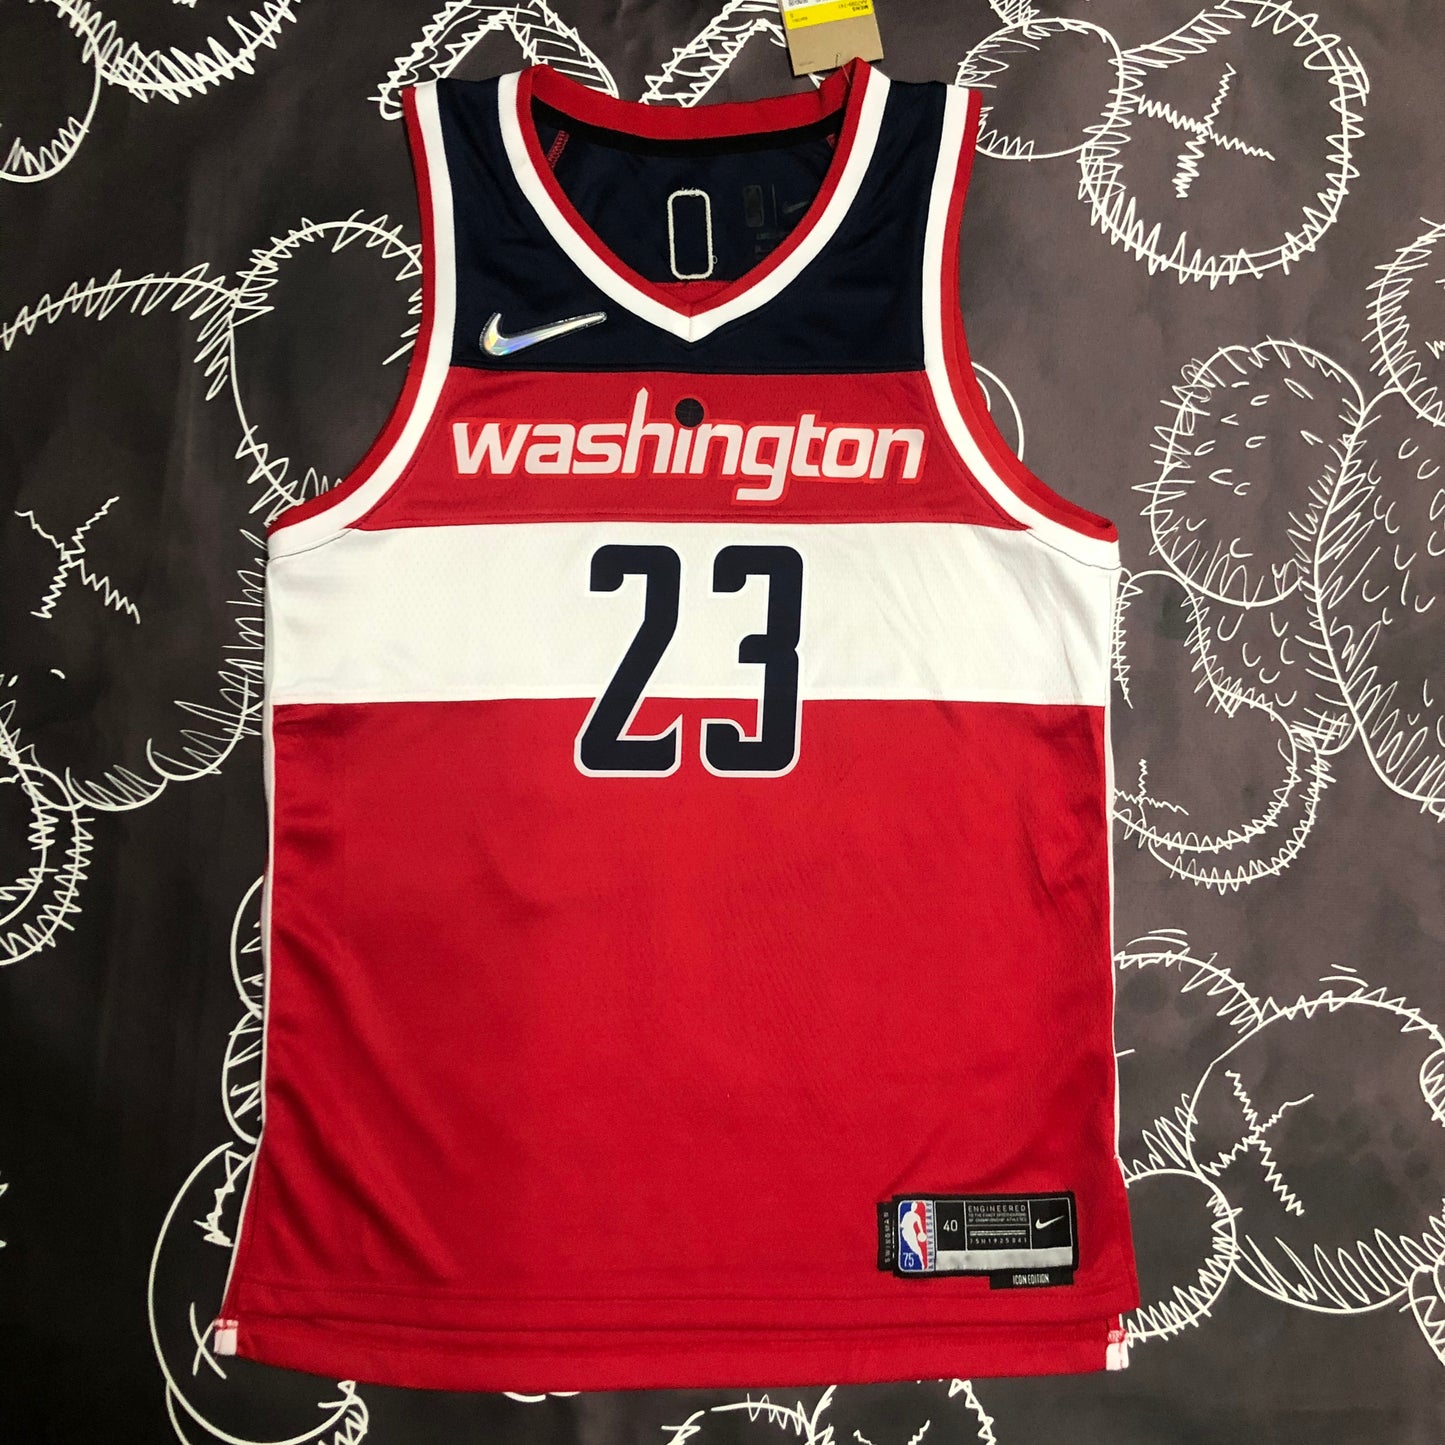 Washington Wizards jersey